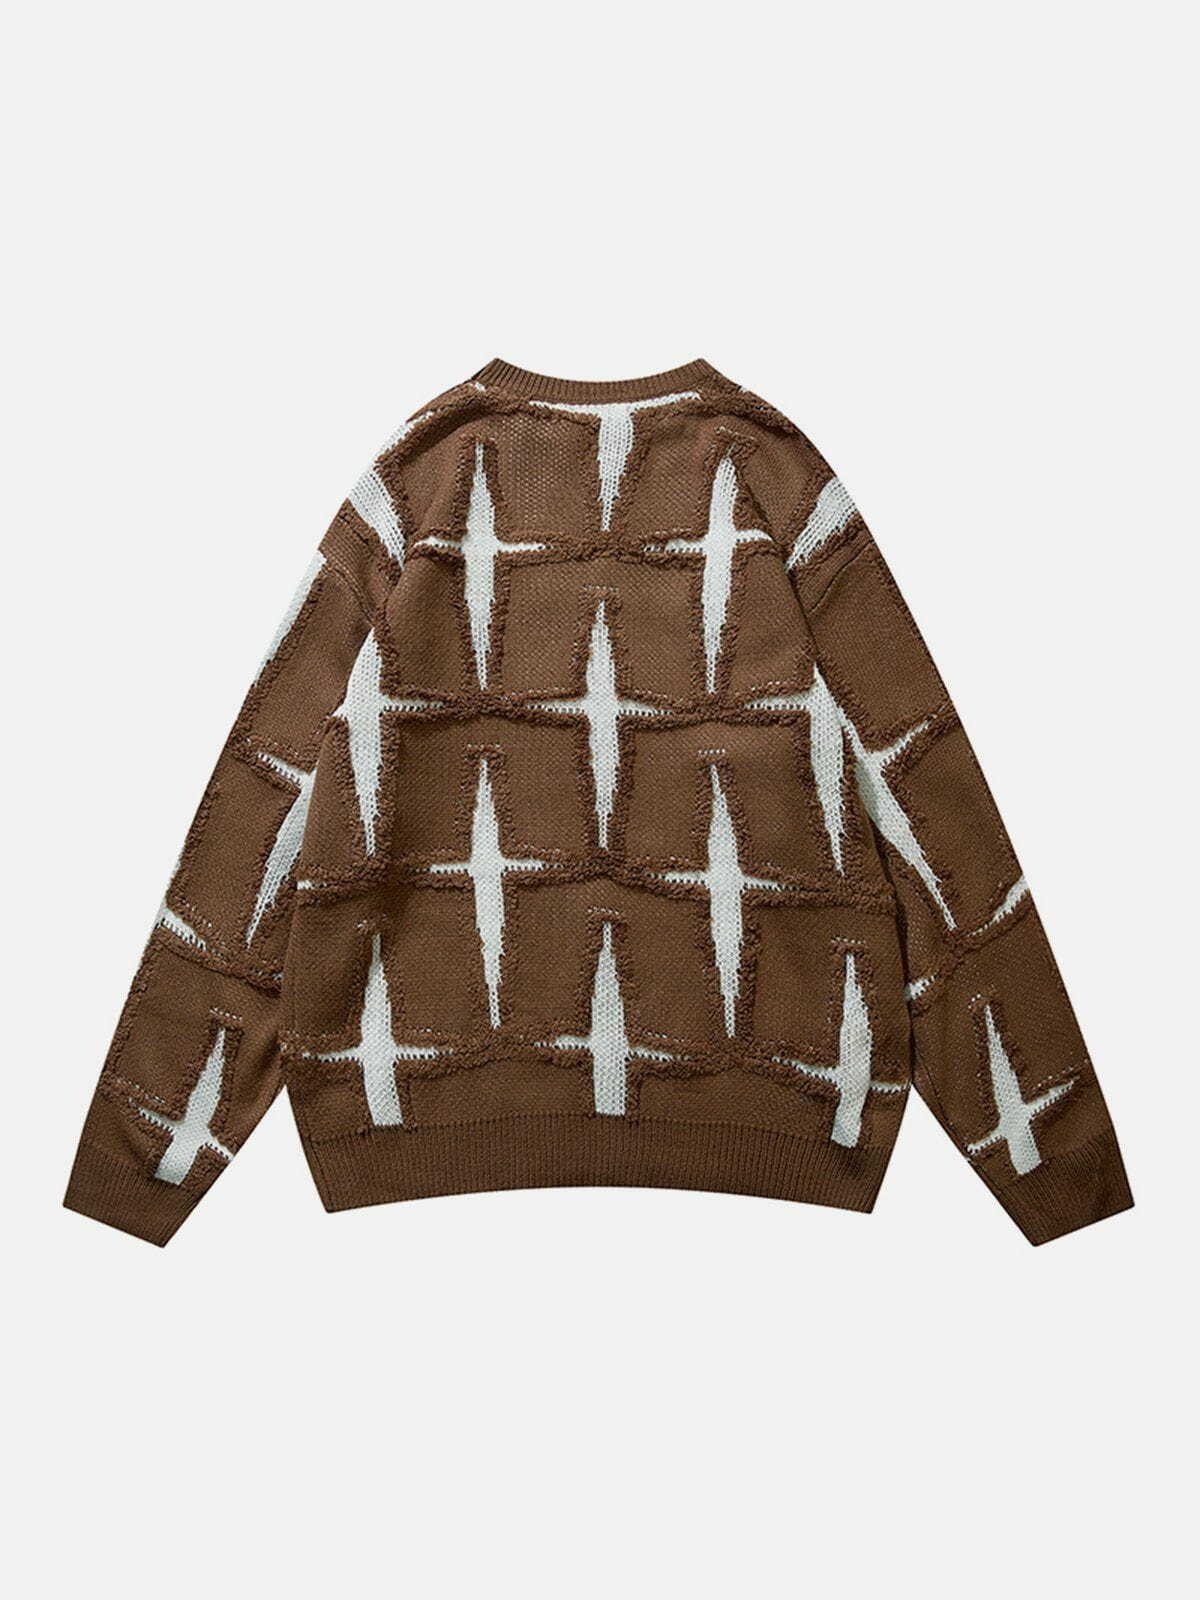 chic cross stitch sweater retro streetwear essential 8119